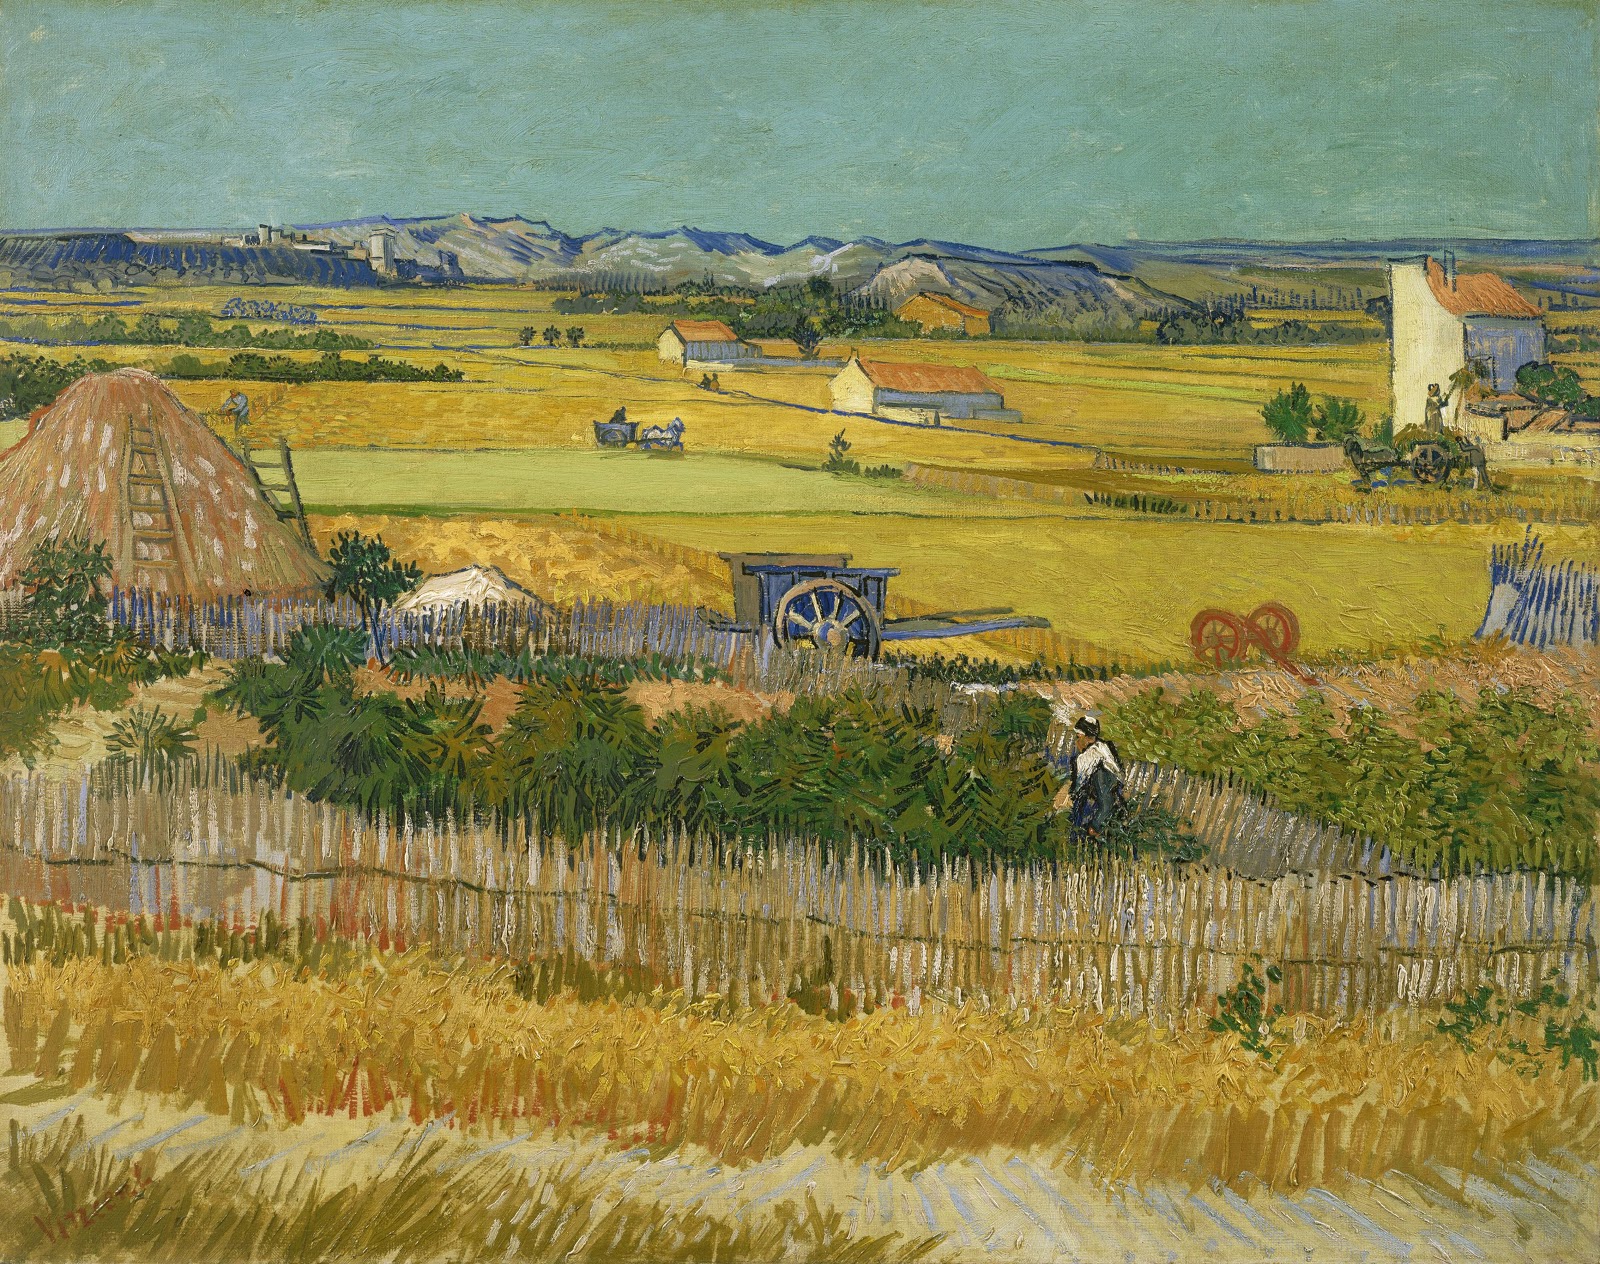 Vincent+Van+Gogh-1853-1890 (808).jpg